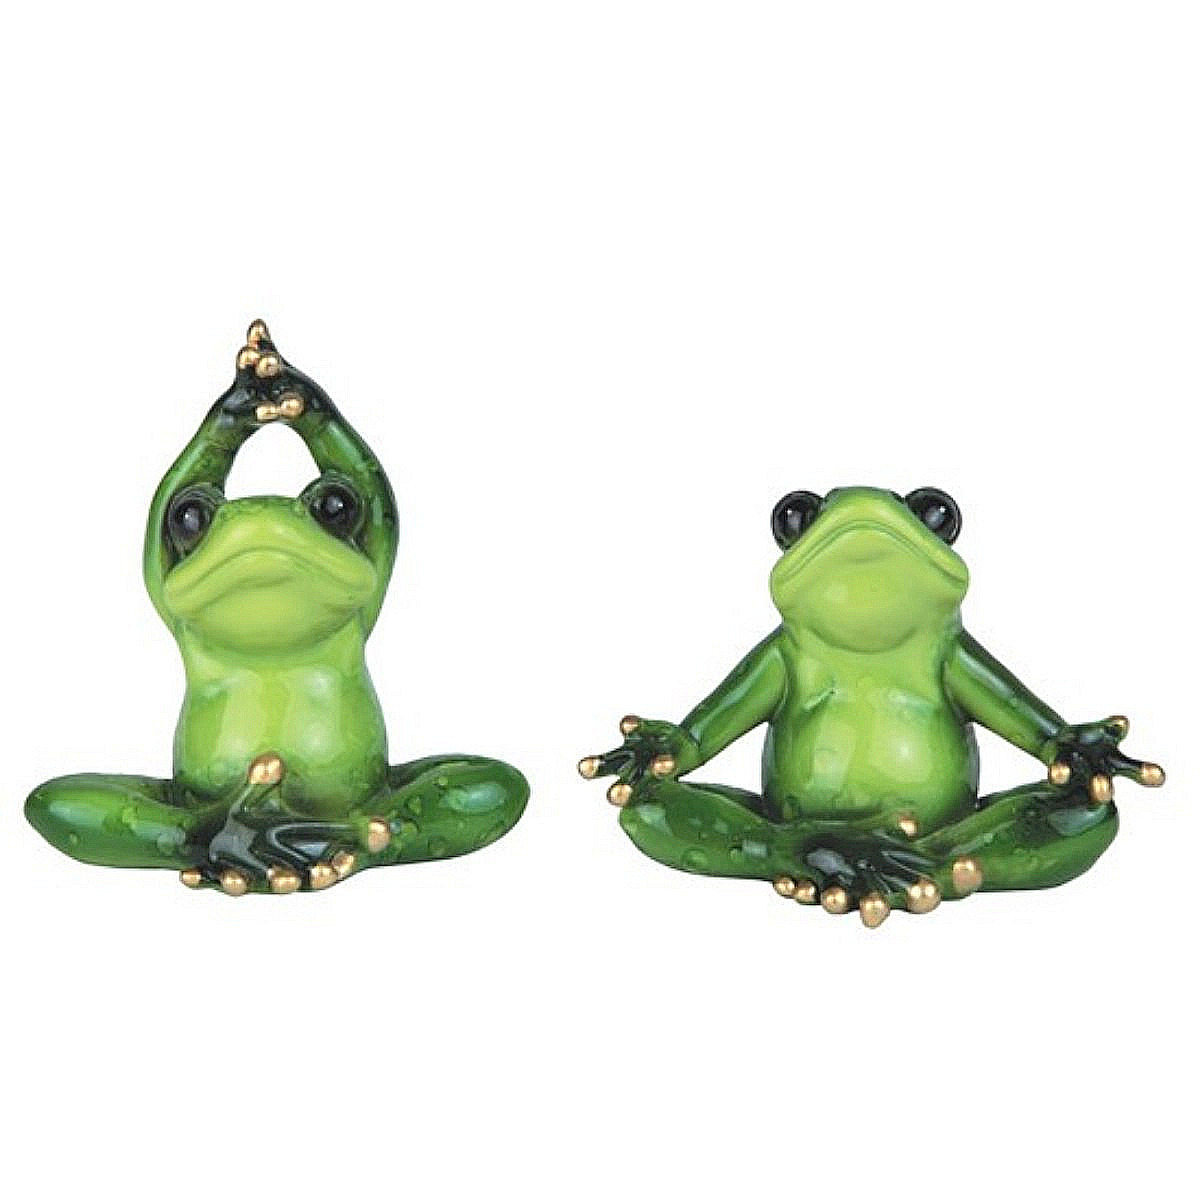 Green Frog Yoga